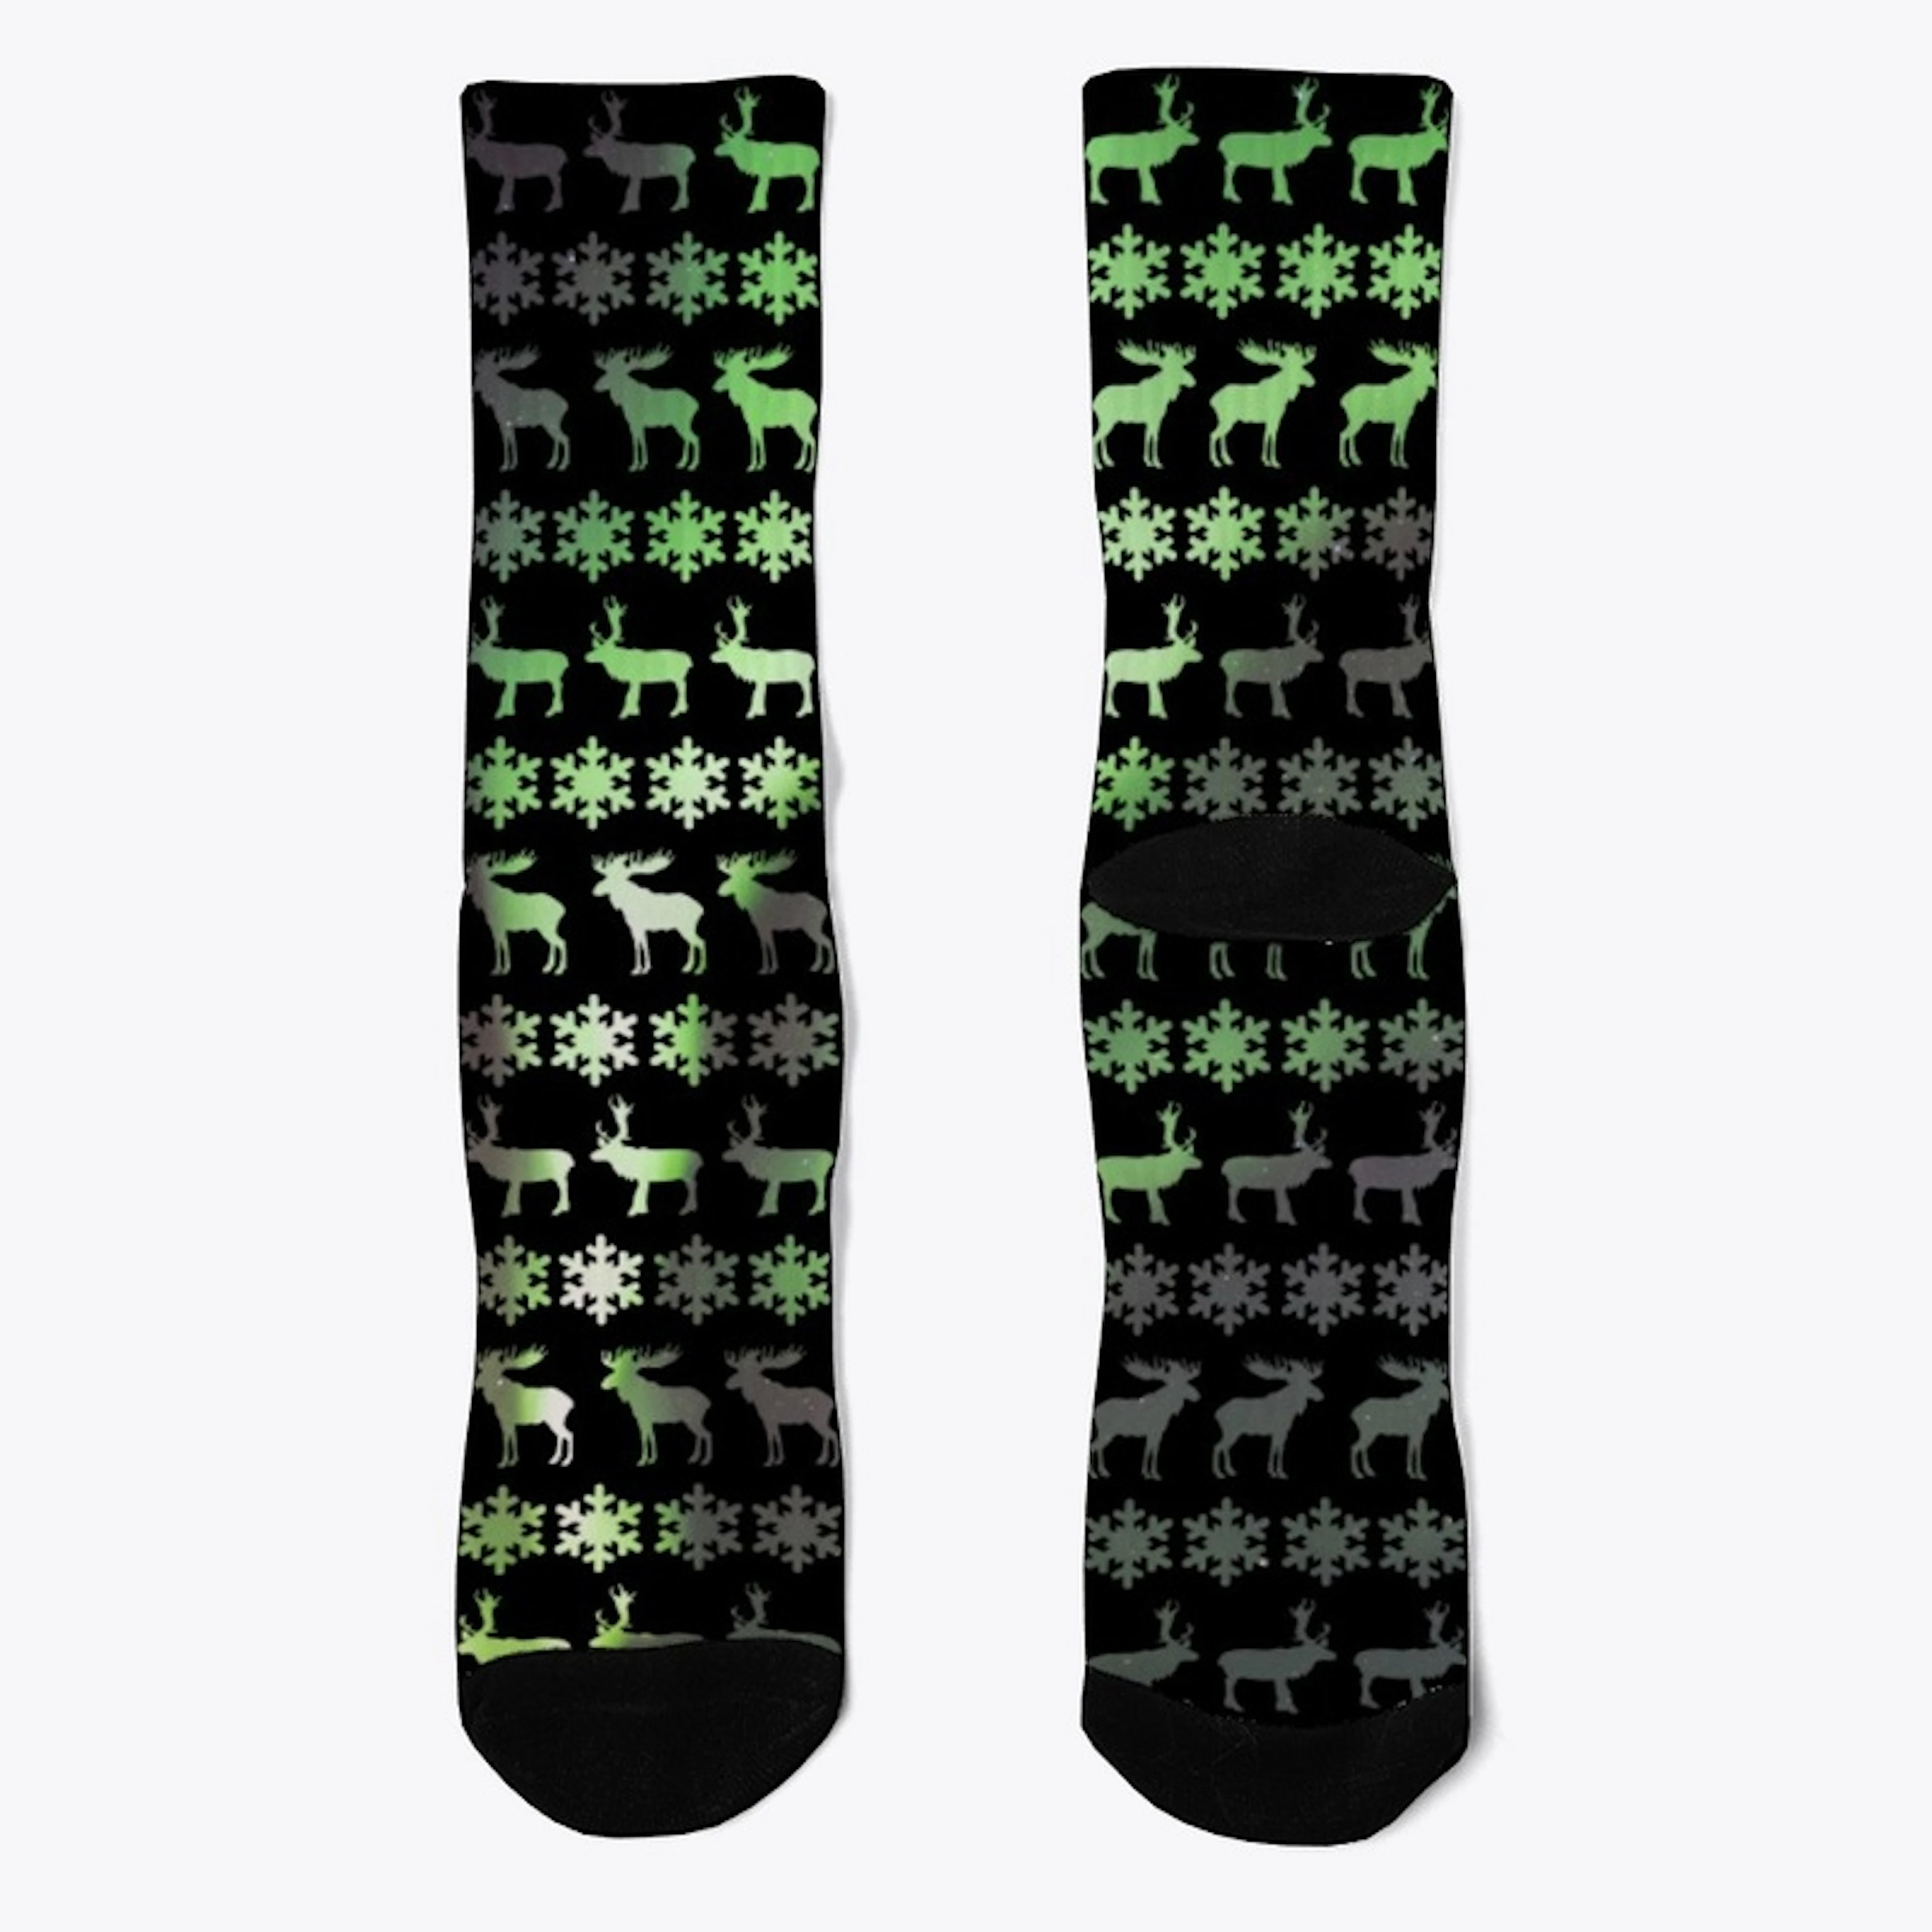 Nordic aurora socks